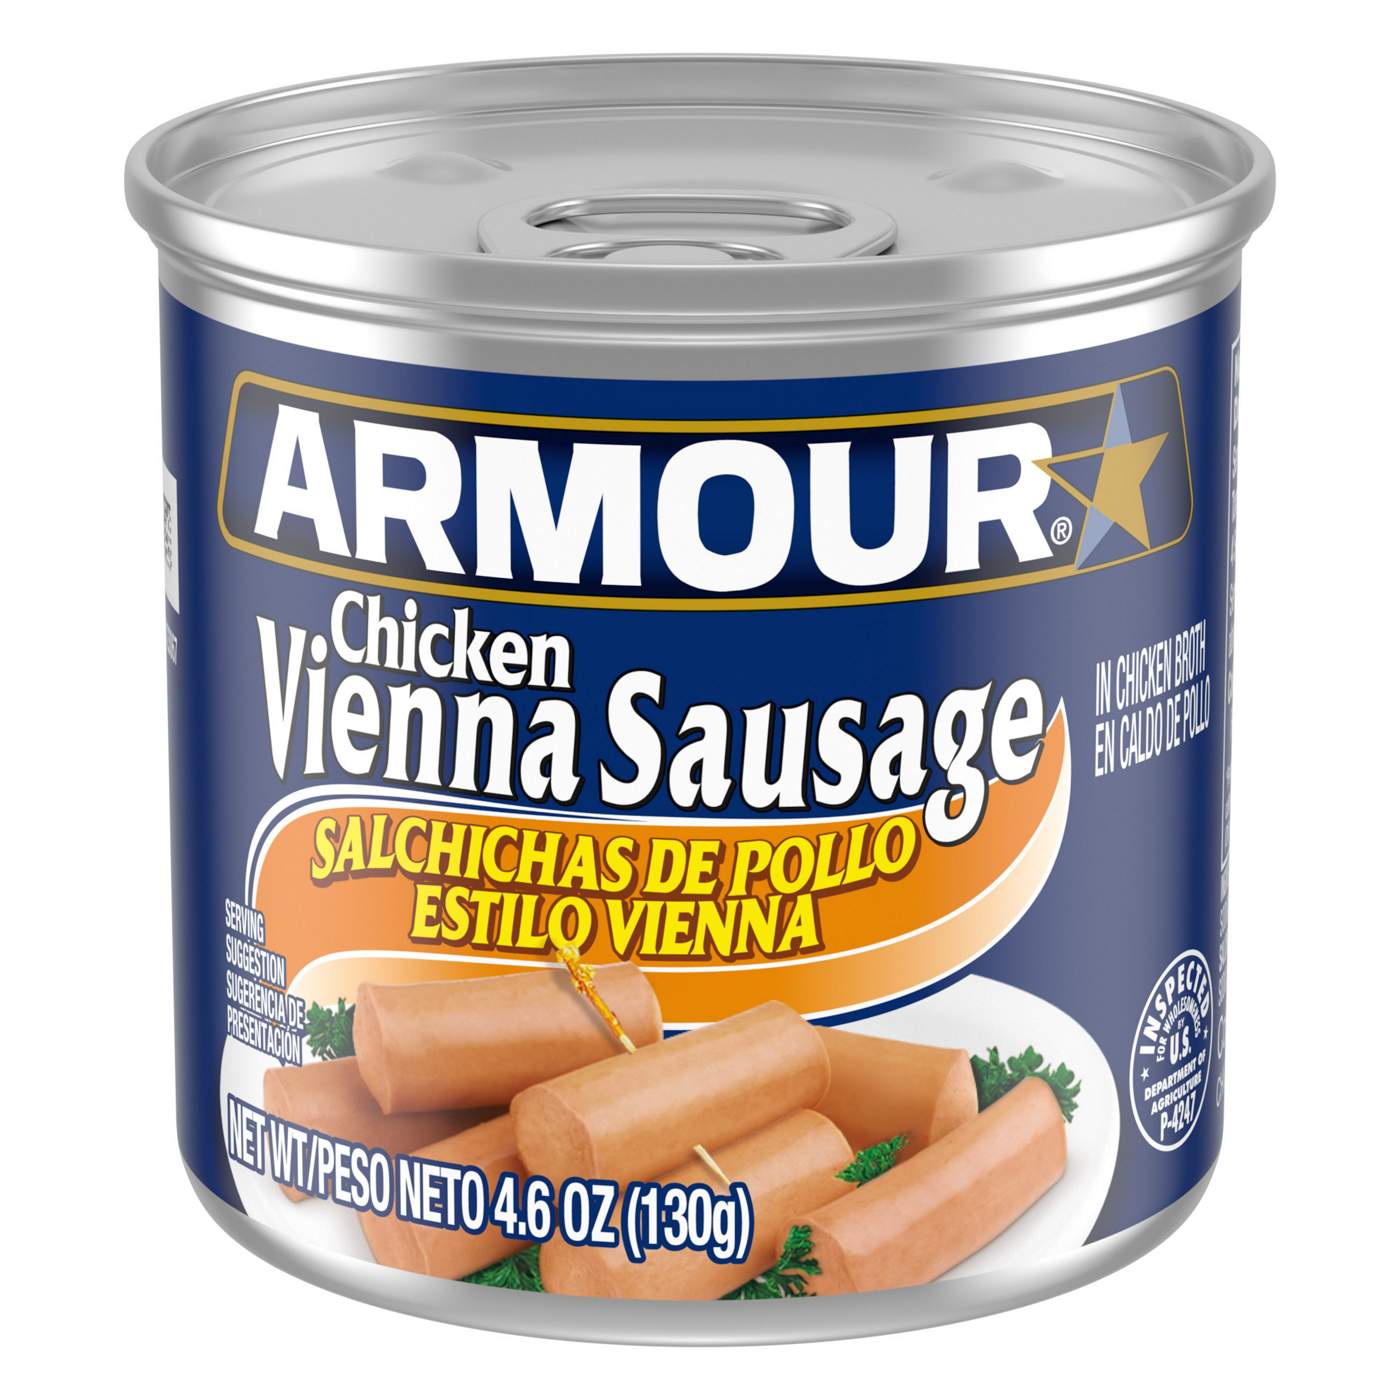 Armour Chicken Vienna Sausage Canned Sausage; image 1 of 4